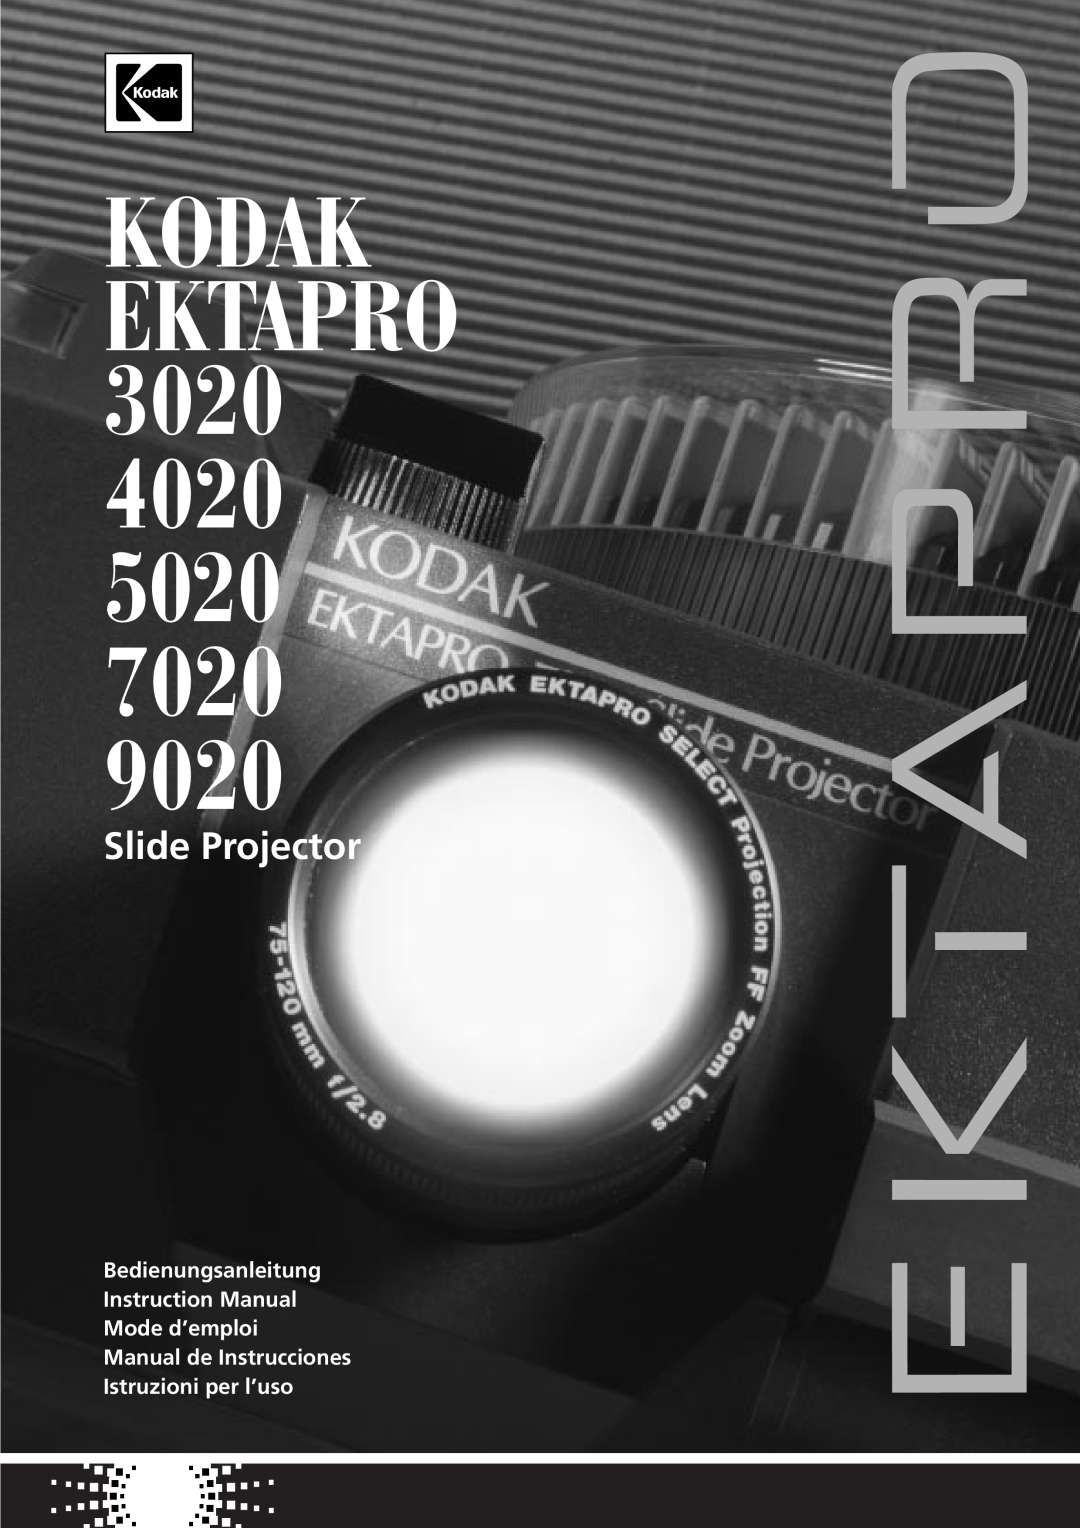 Kodak manual Supplement To The Manual, KODAK EKTAPRO 7010/7020/9010/9020 Slide Projector, Eastman Kodak Company 